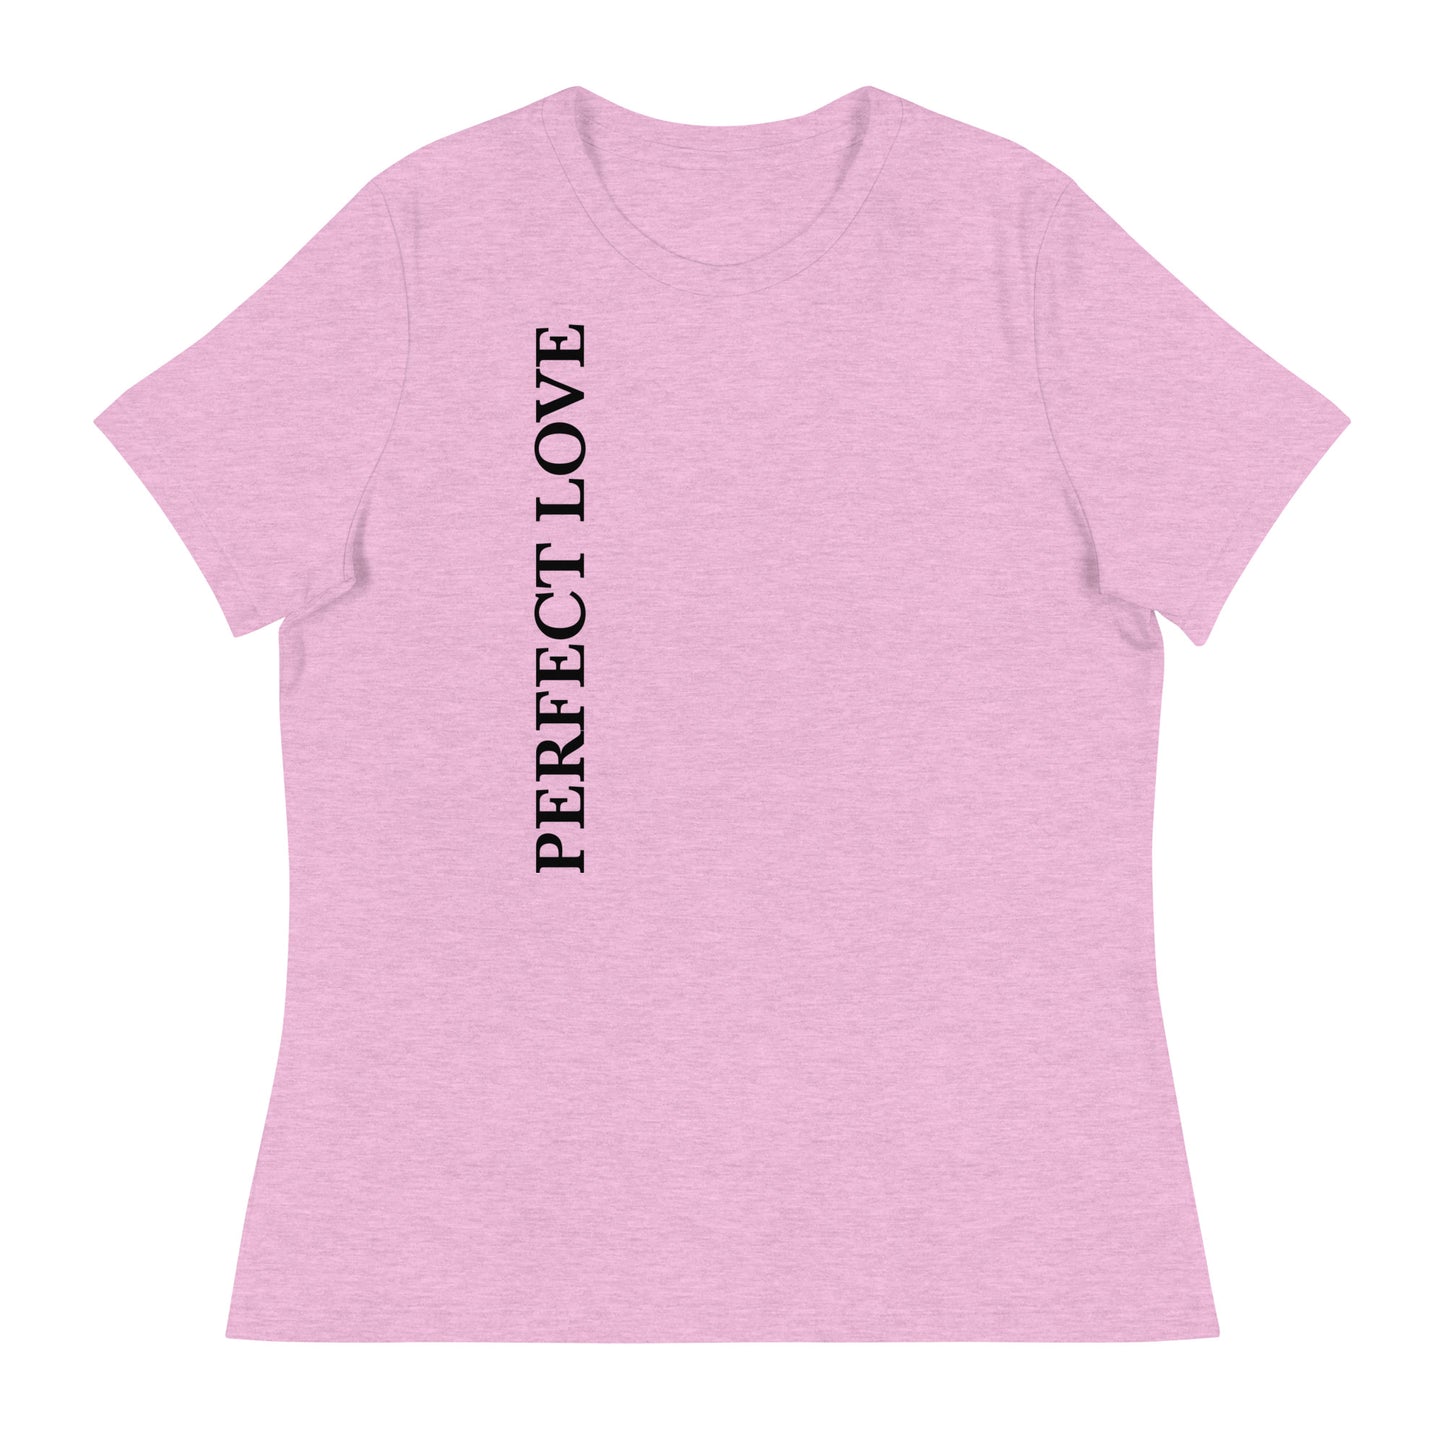 Perfect Love Women's Relaxed T-Shirt